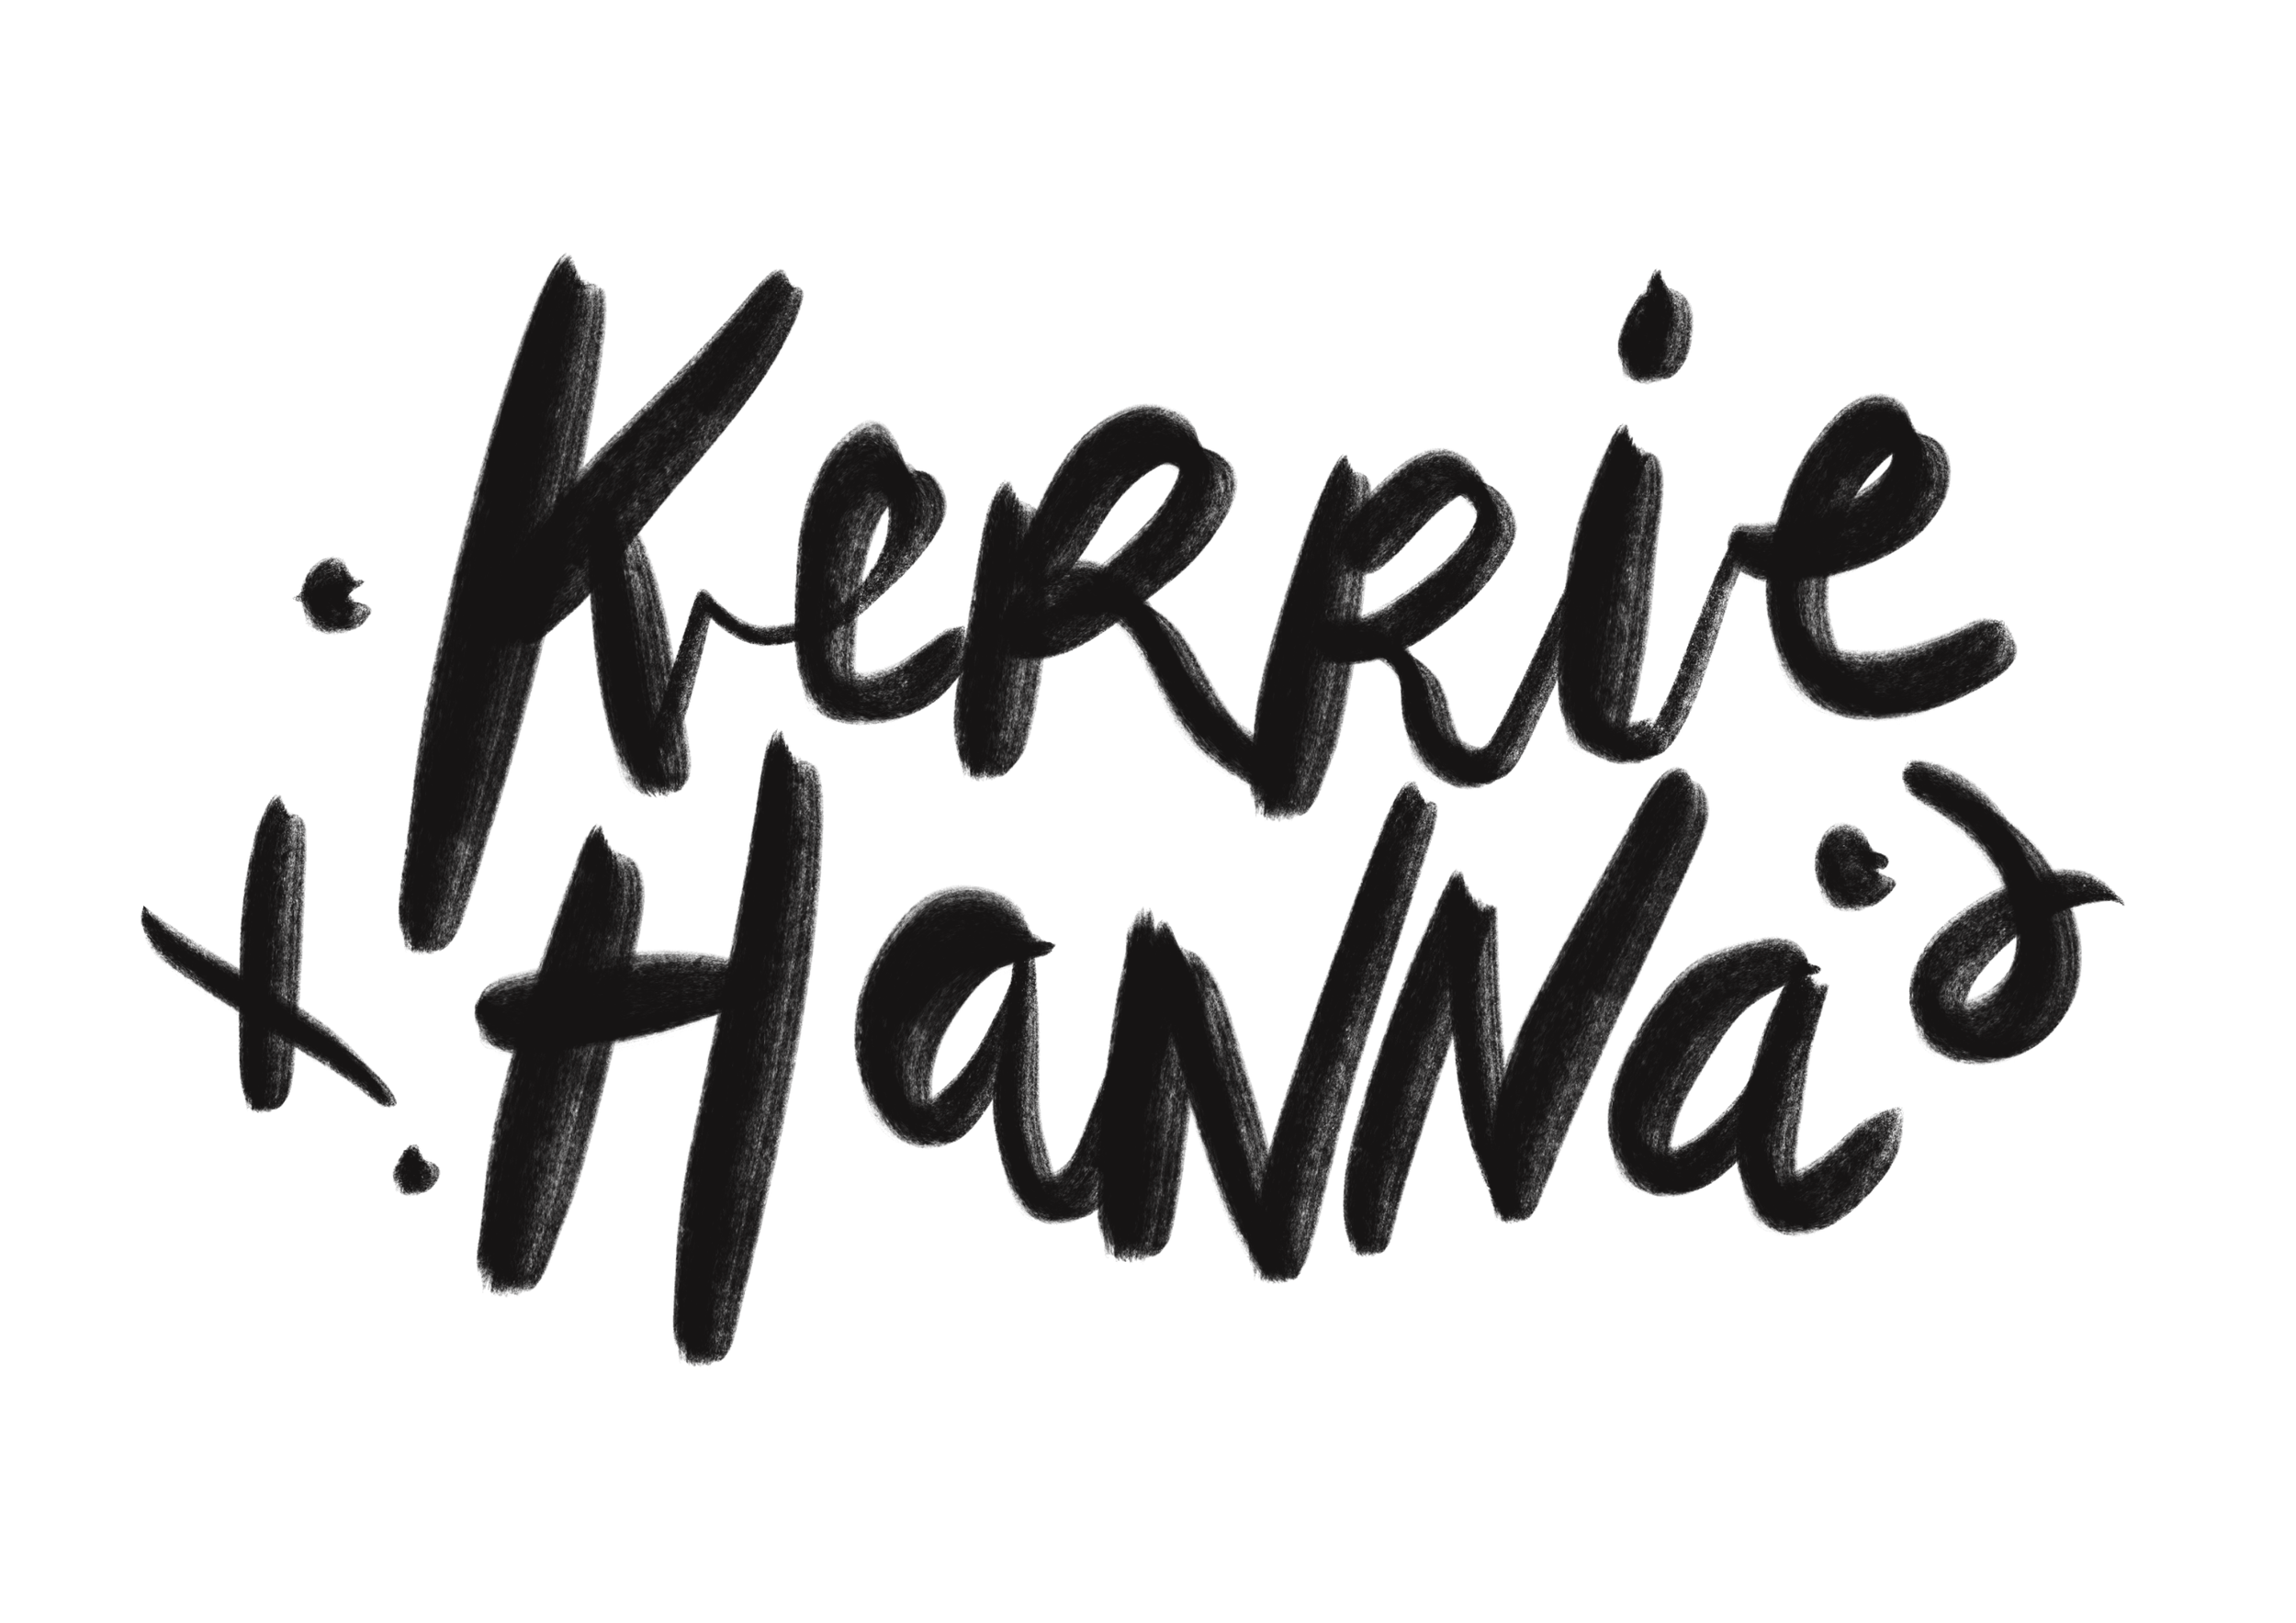 Kerrie Hanna